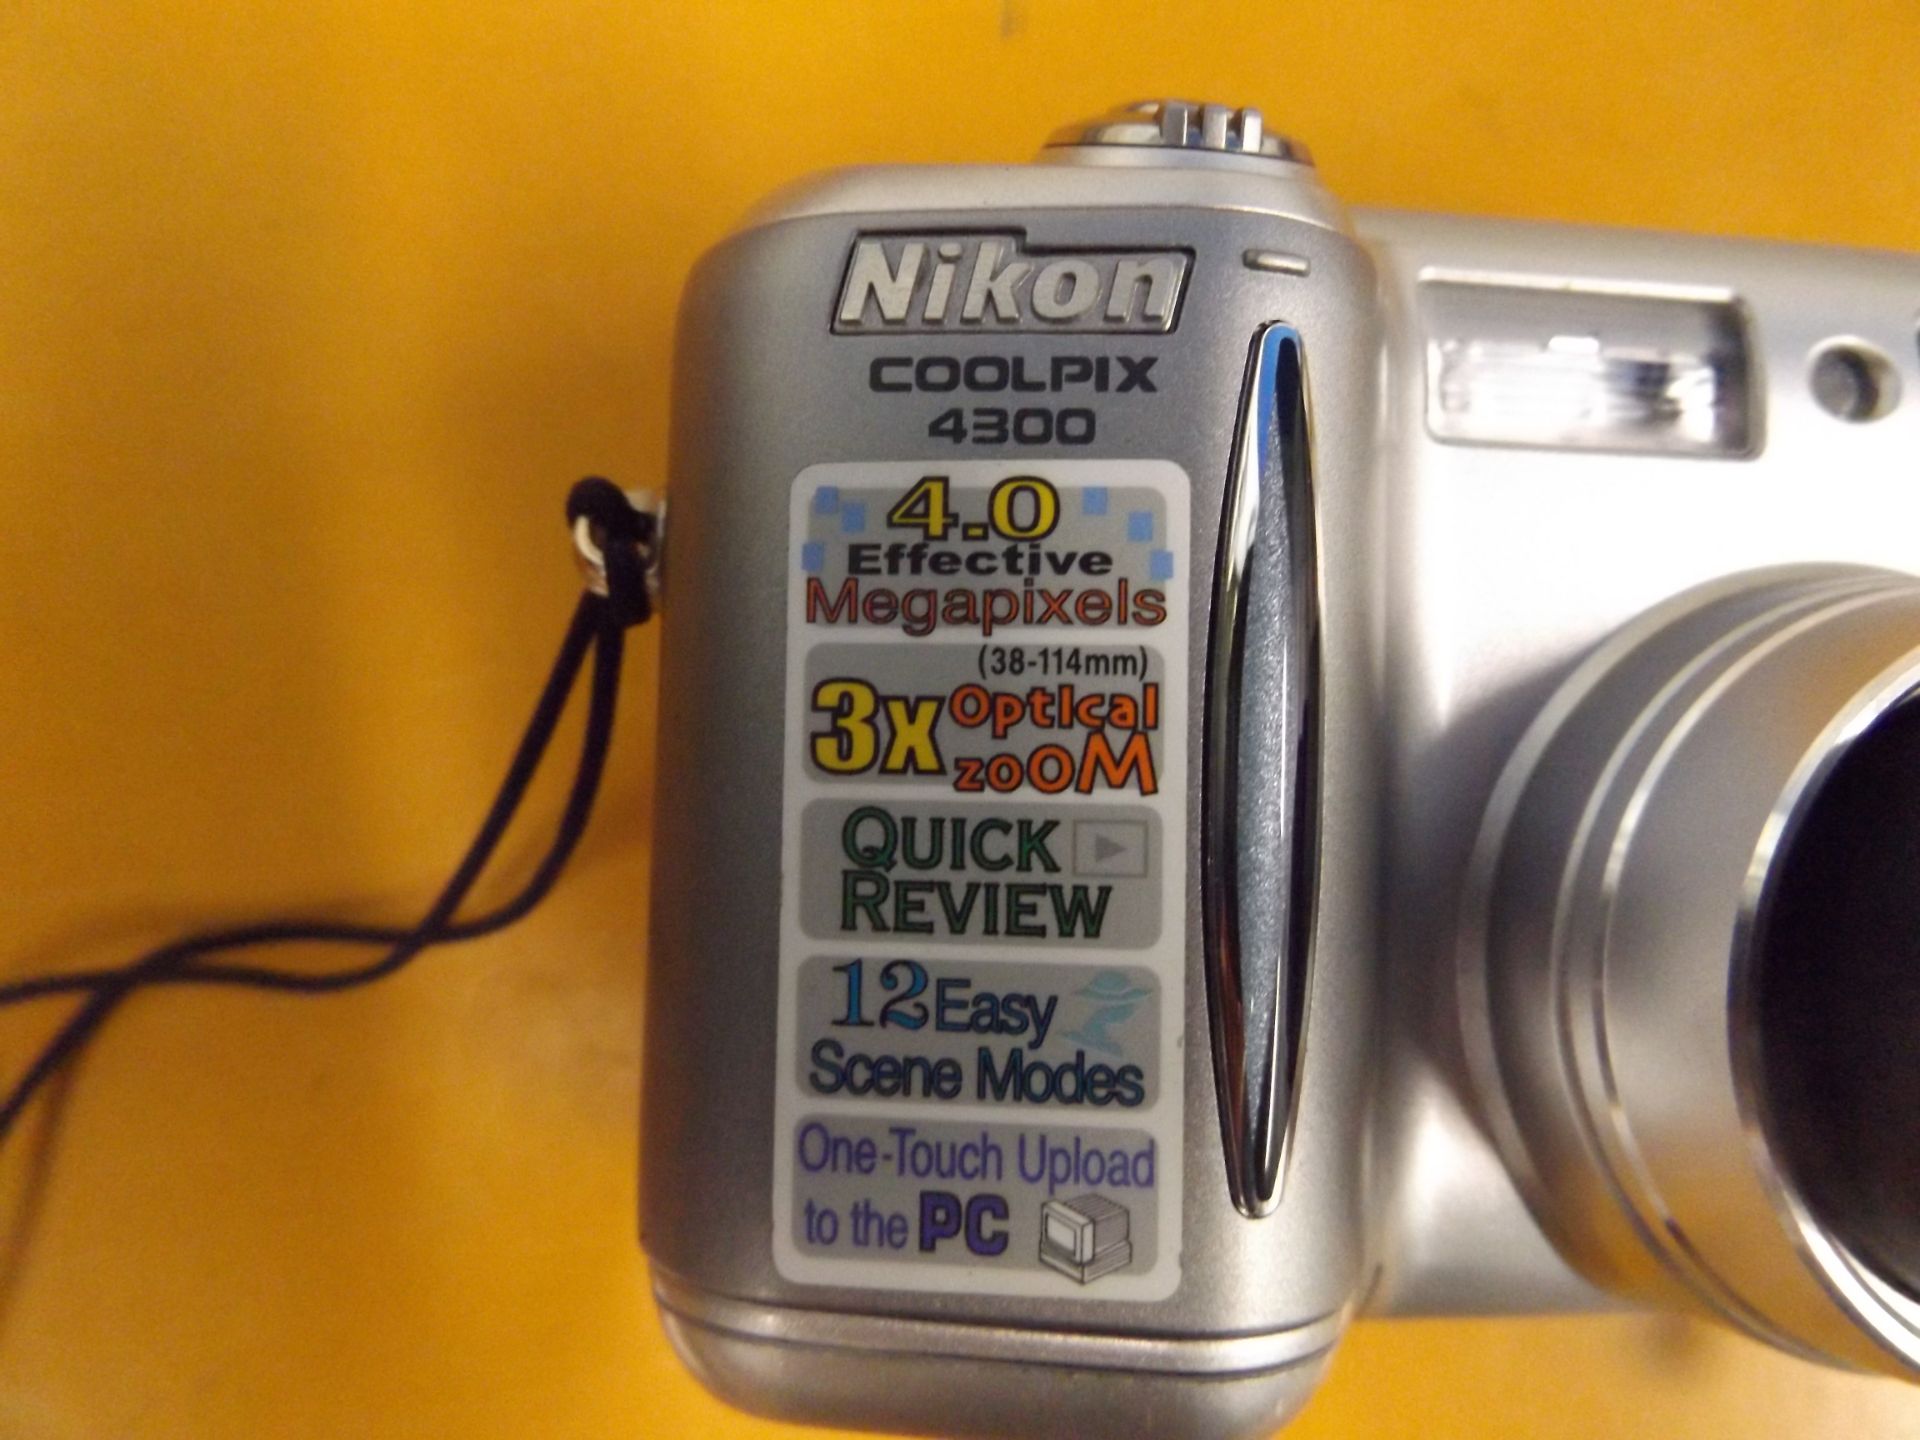 Nikon Coolpix 4300 4.0 Mp Digital Camera - Image 4 of 7